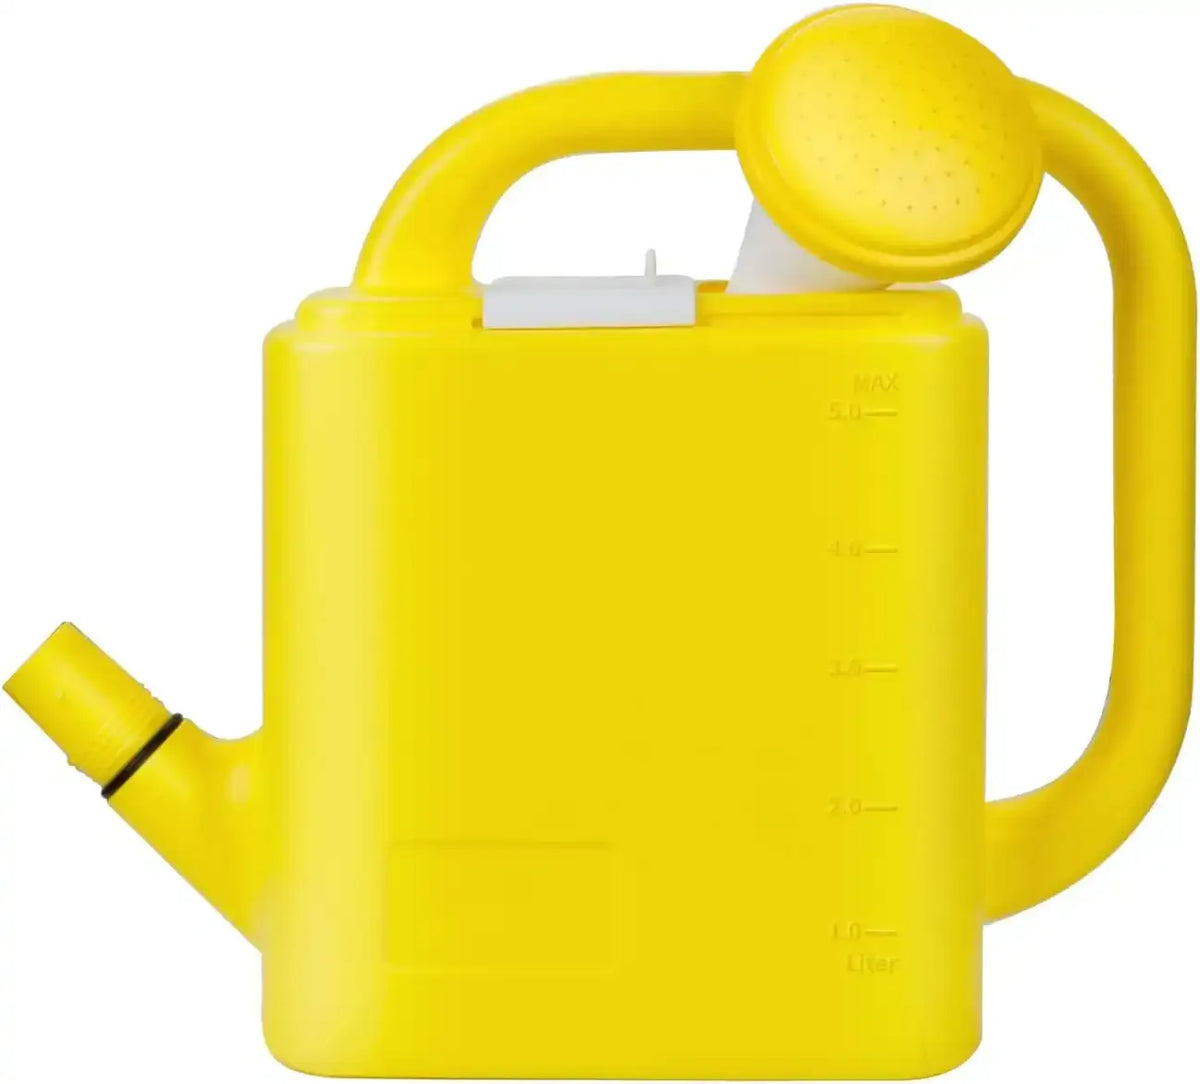 Gartol-Garden 1.3 Gallon Plastic Water Spray Can Yellow